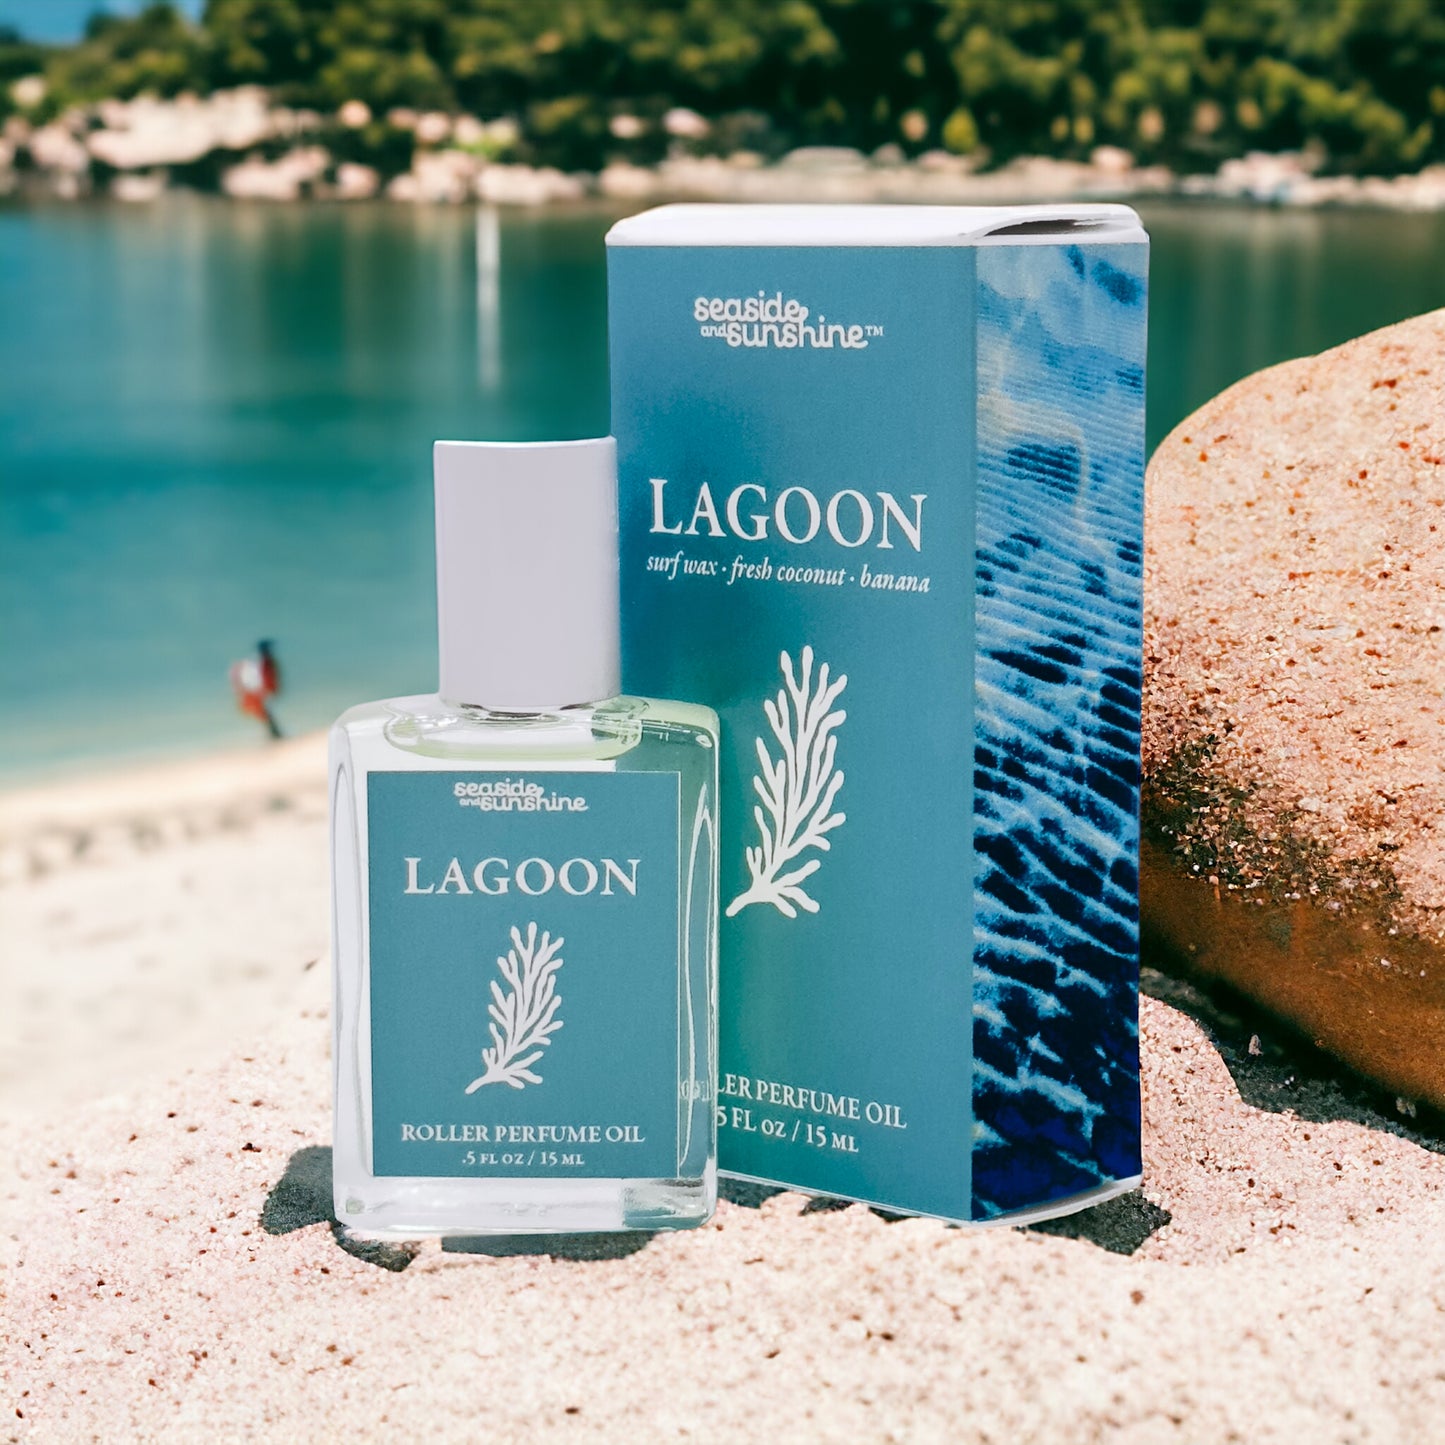 LAGOON Roller Perfume